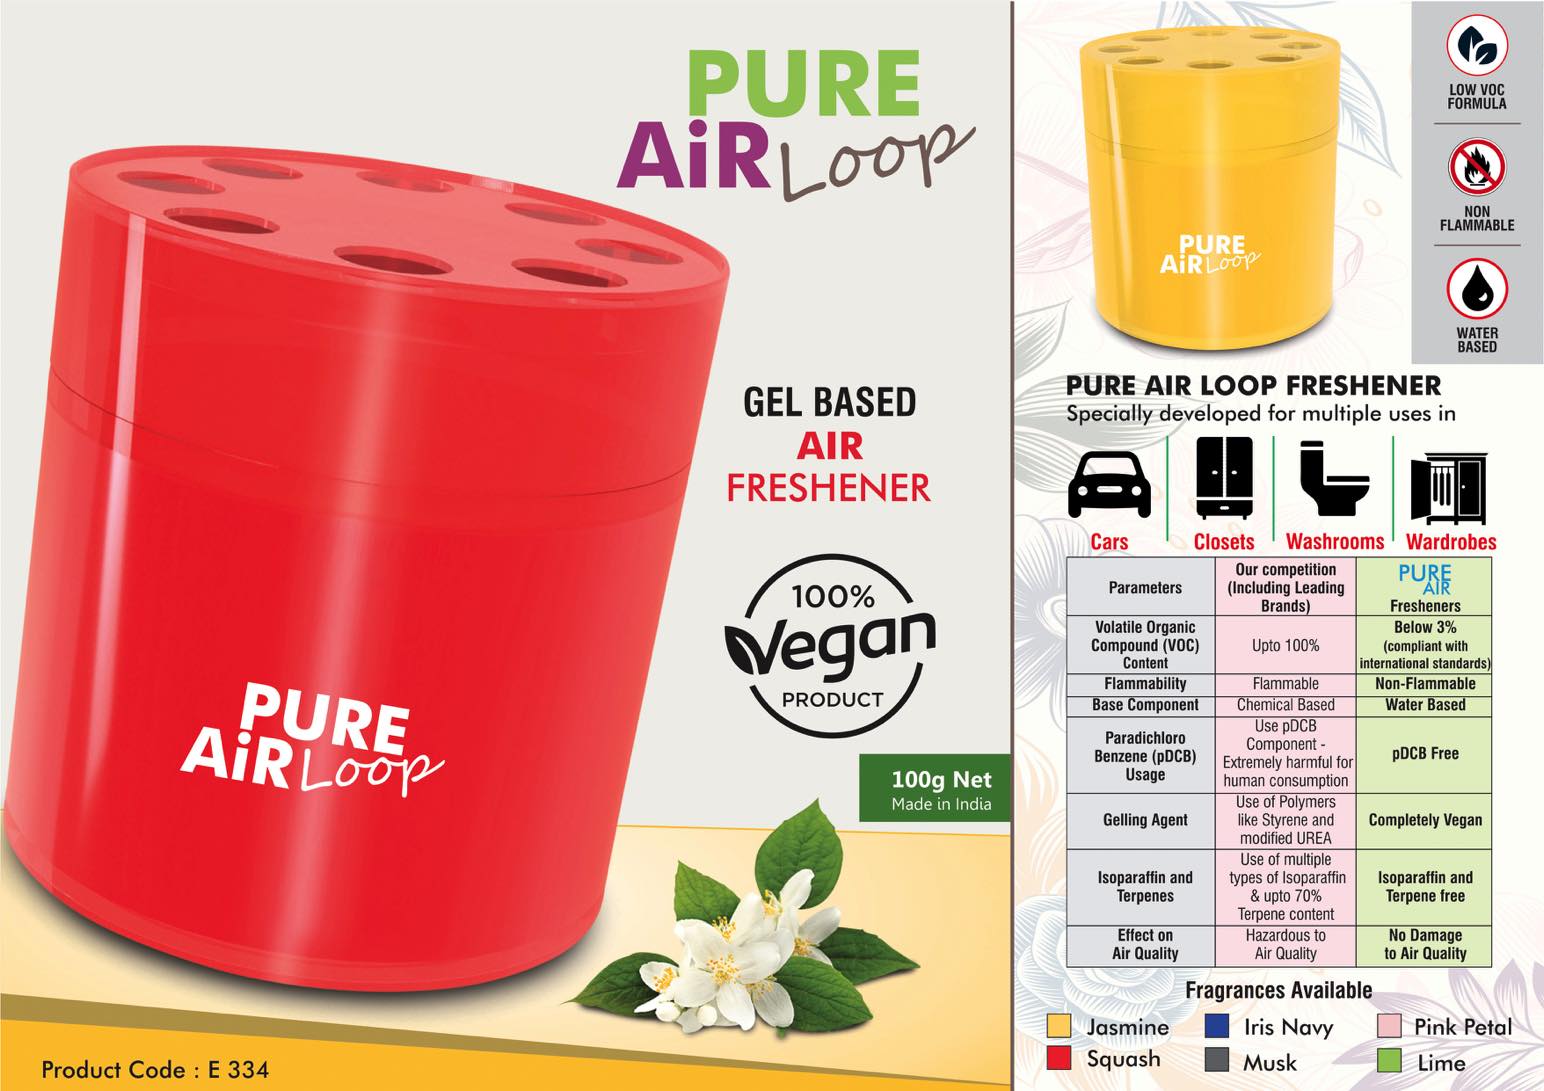 Pure Air Loop: Gel Based Room Freshener For Home, Office And Car | Net 100 Grams